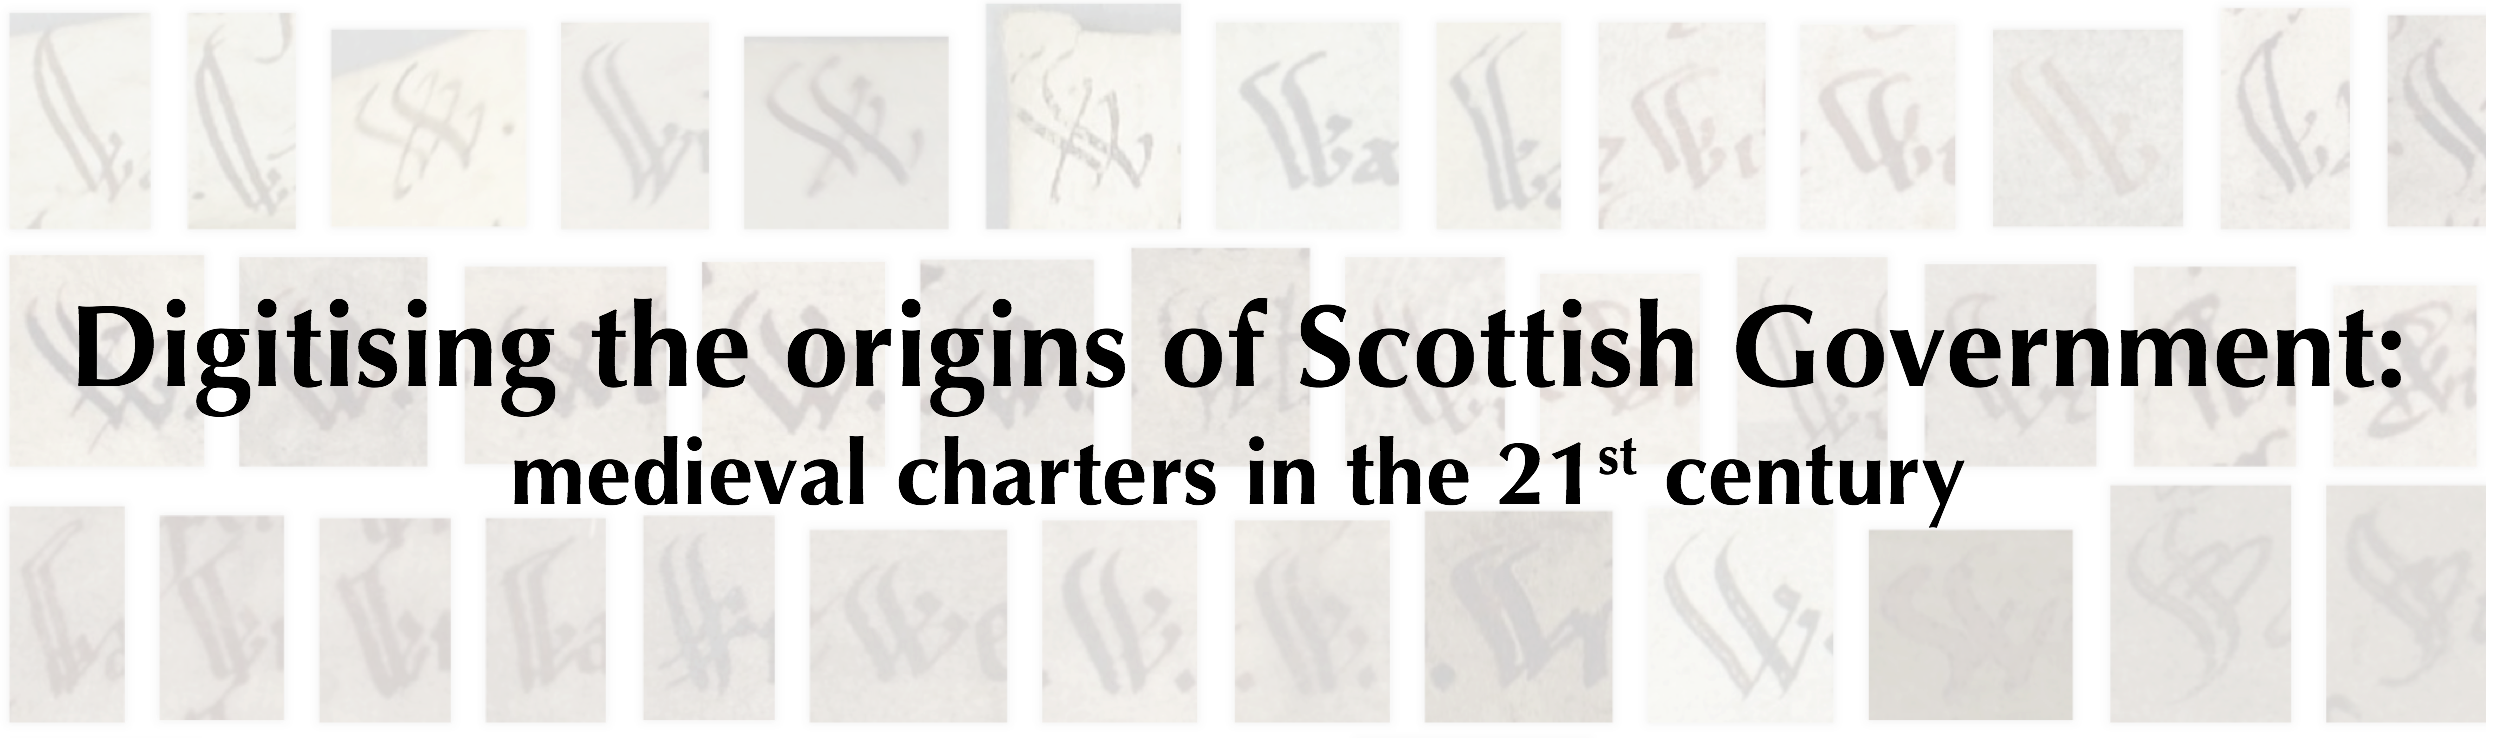 Digitising the origins of Scottish Government, public conference banner